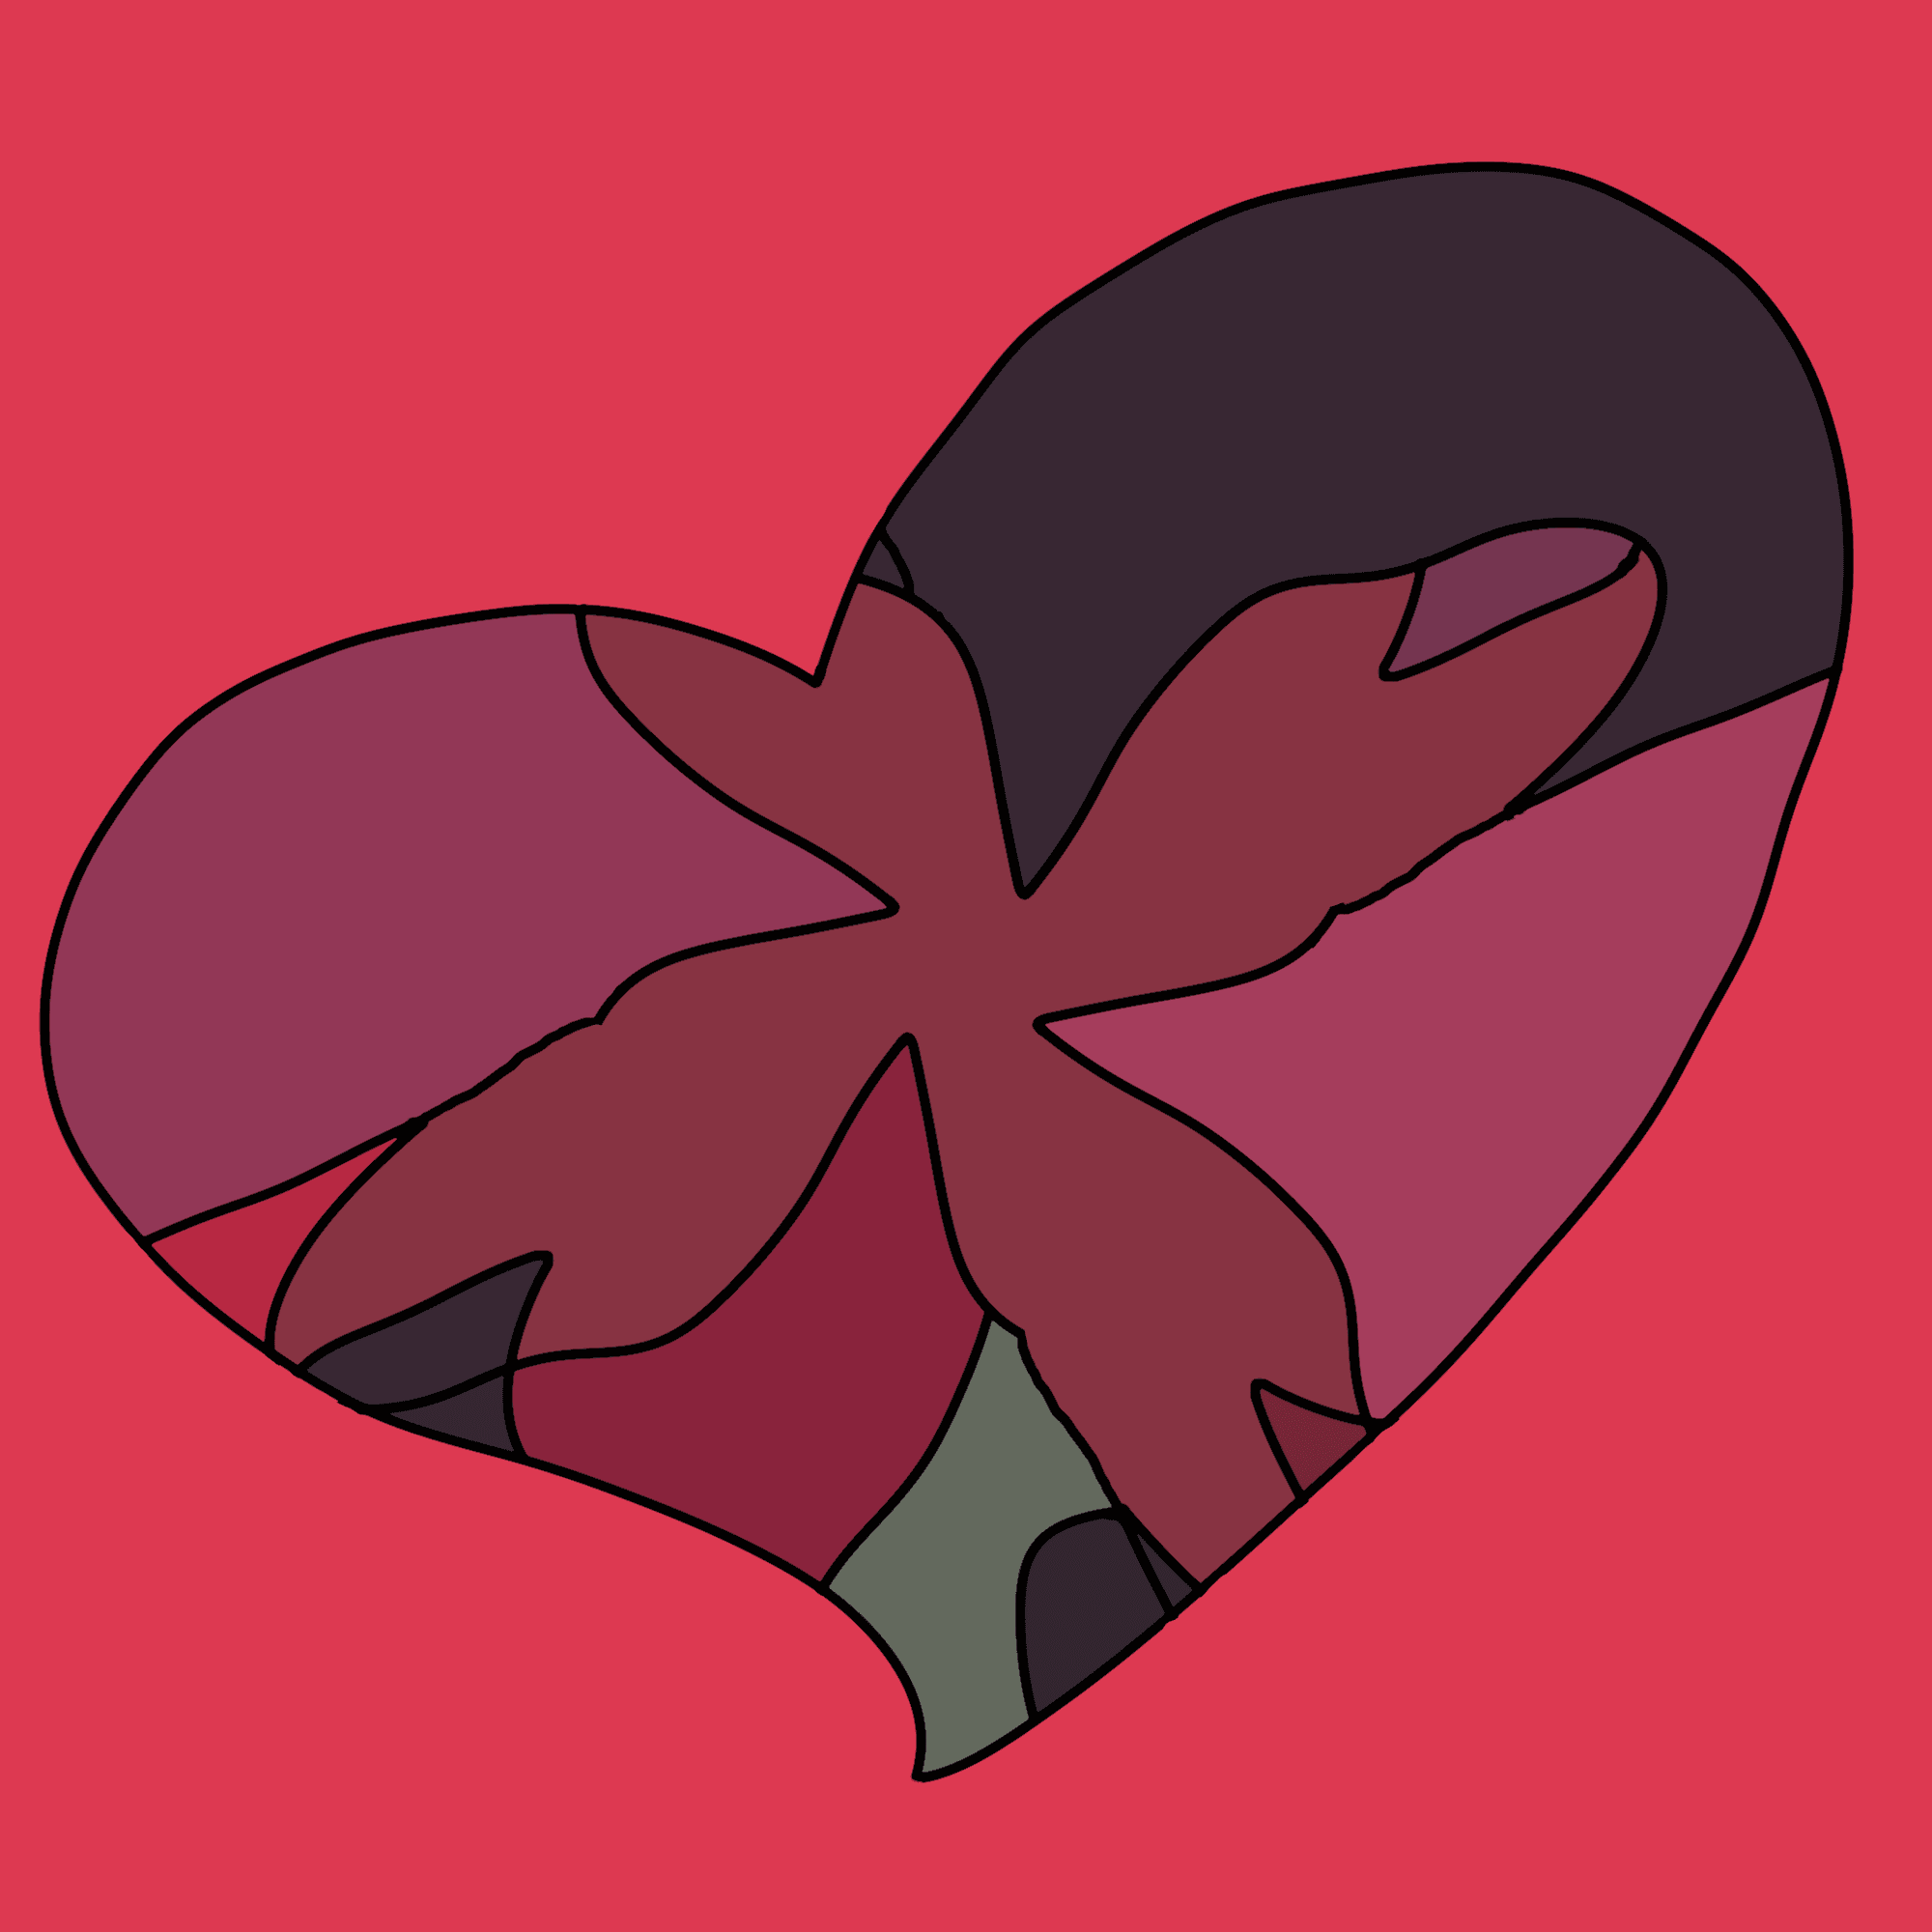 Conceptual Hearts 008